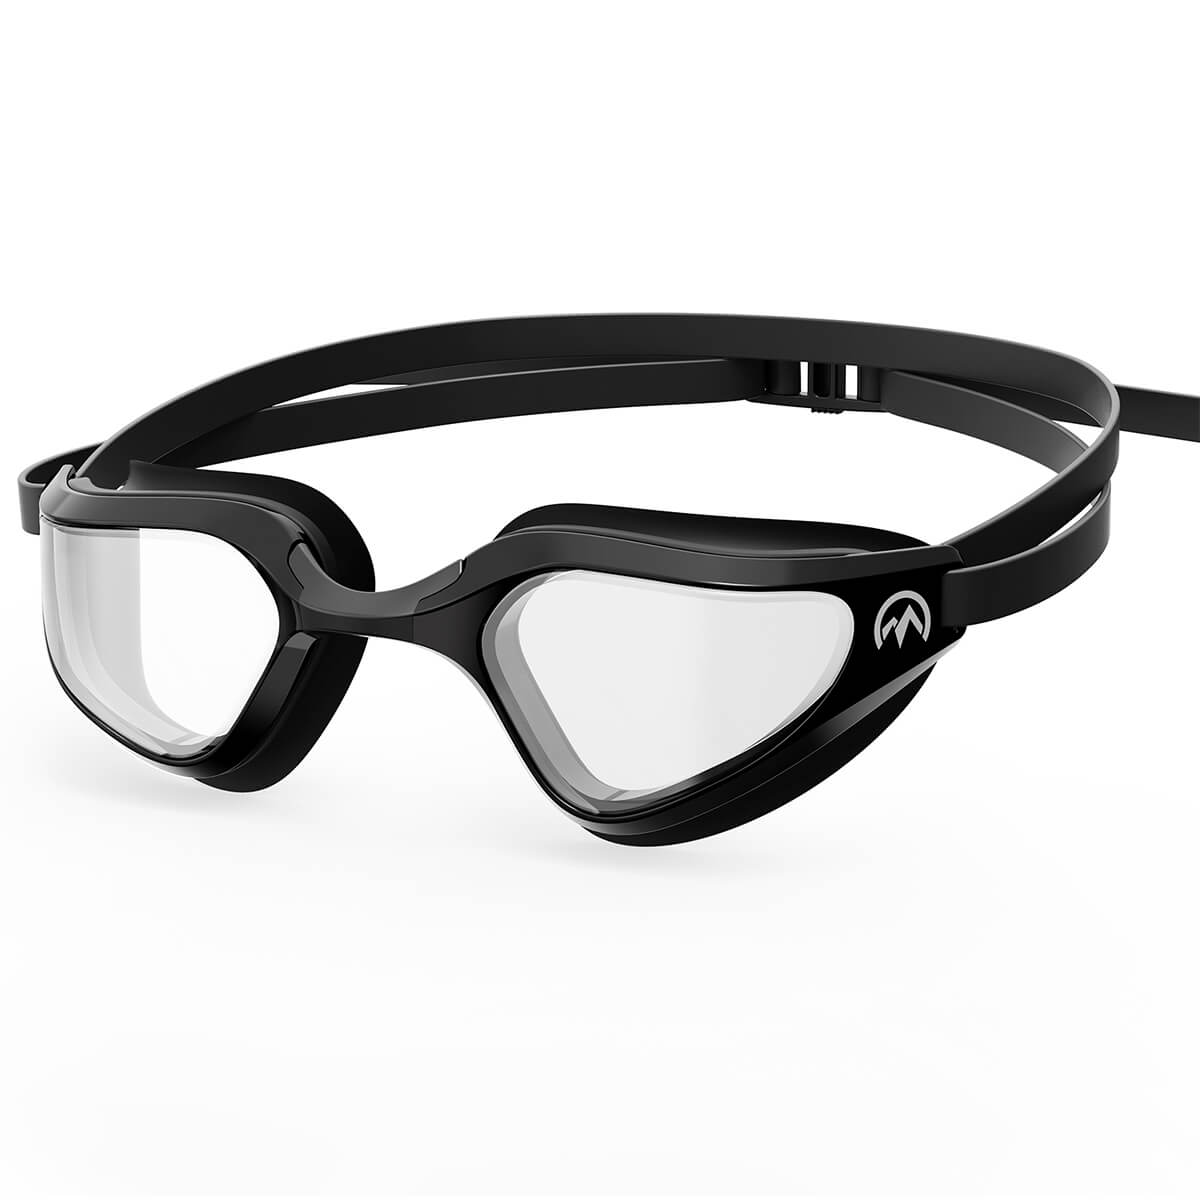 Fisheye Anti-fog Swimming Goggles for Adults